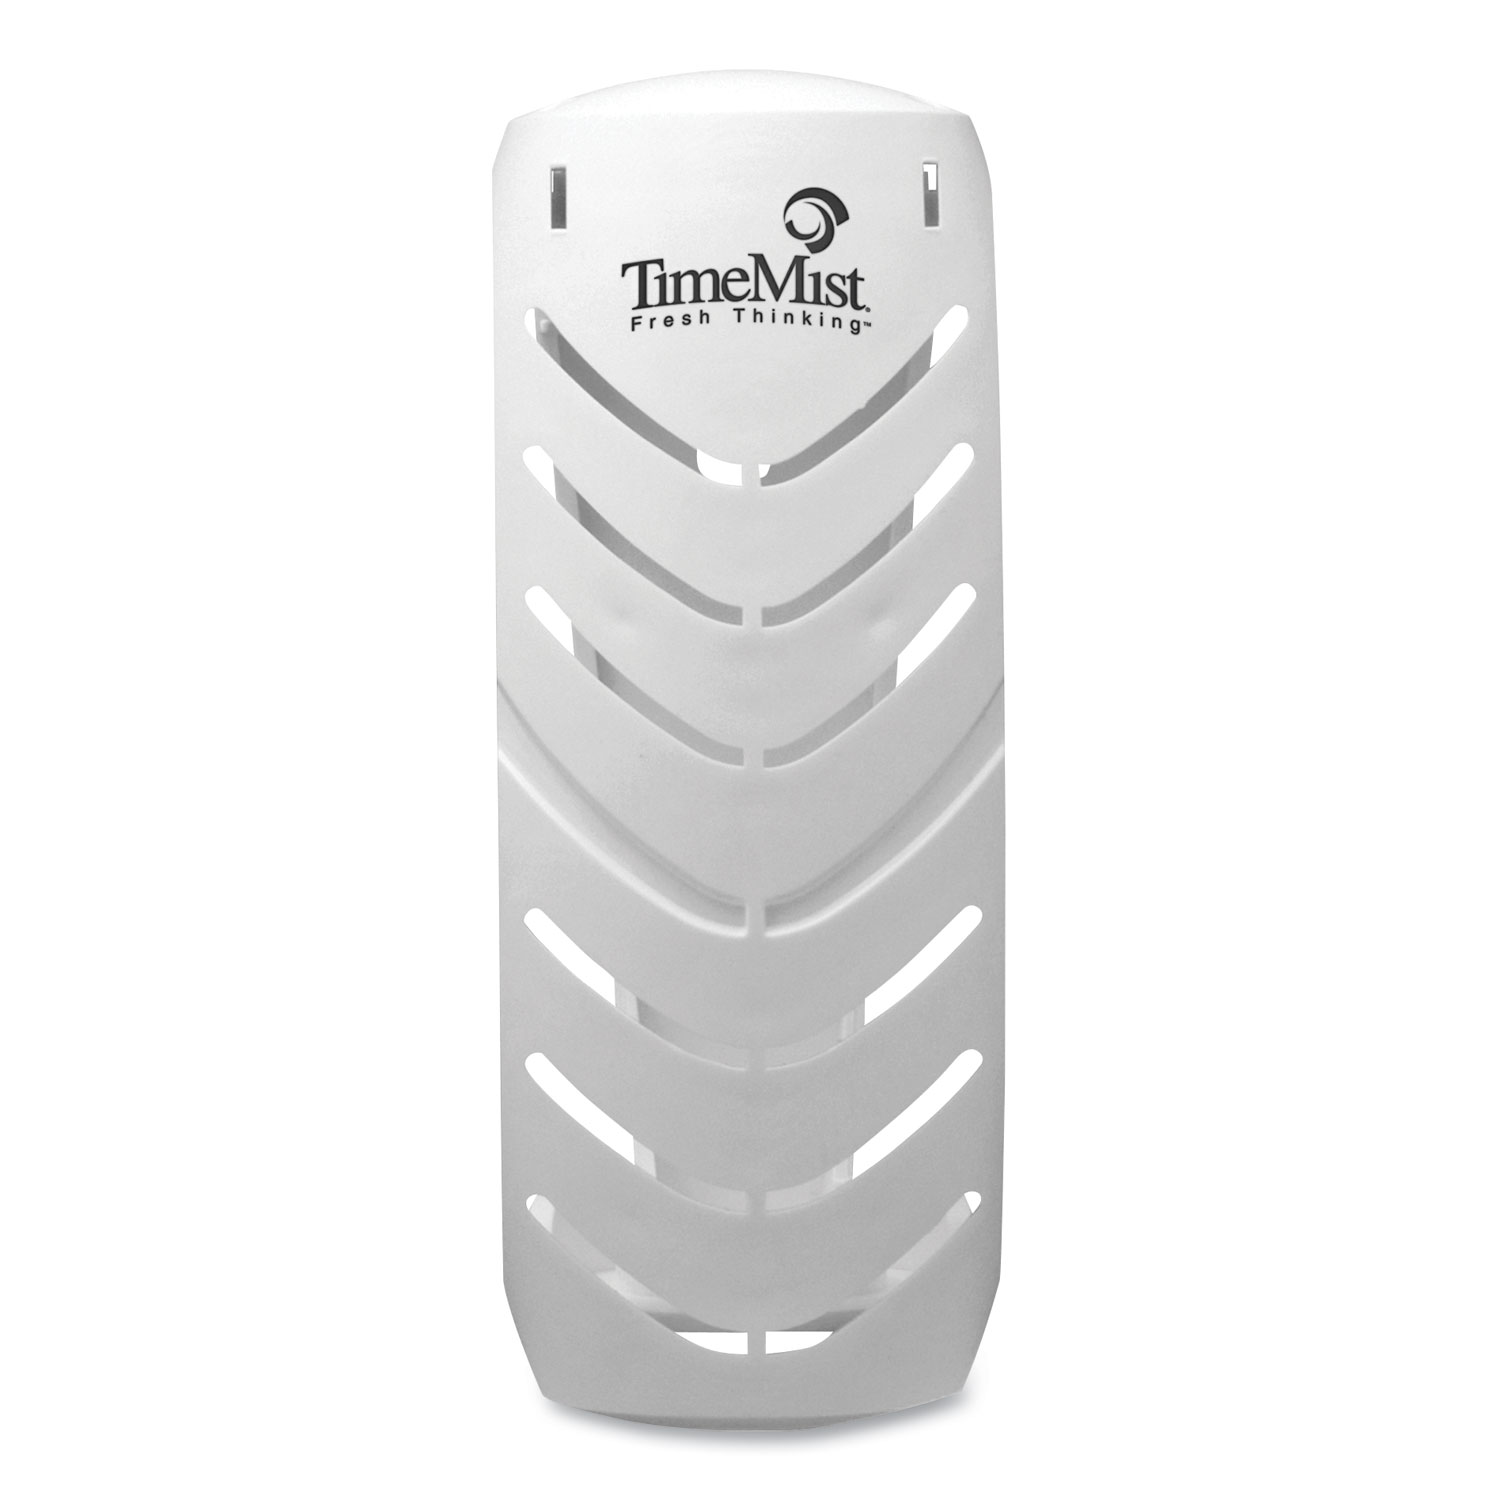  TimeMist 1044155 TimeWick Automatic Dispenser, 2.25 x 3.25 x 5.75, White (TMS1044155) 